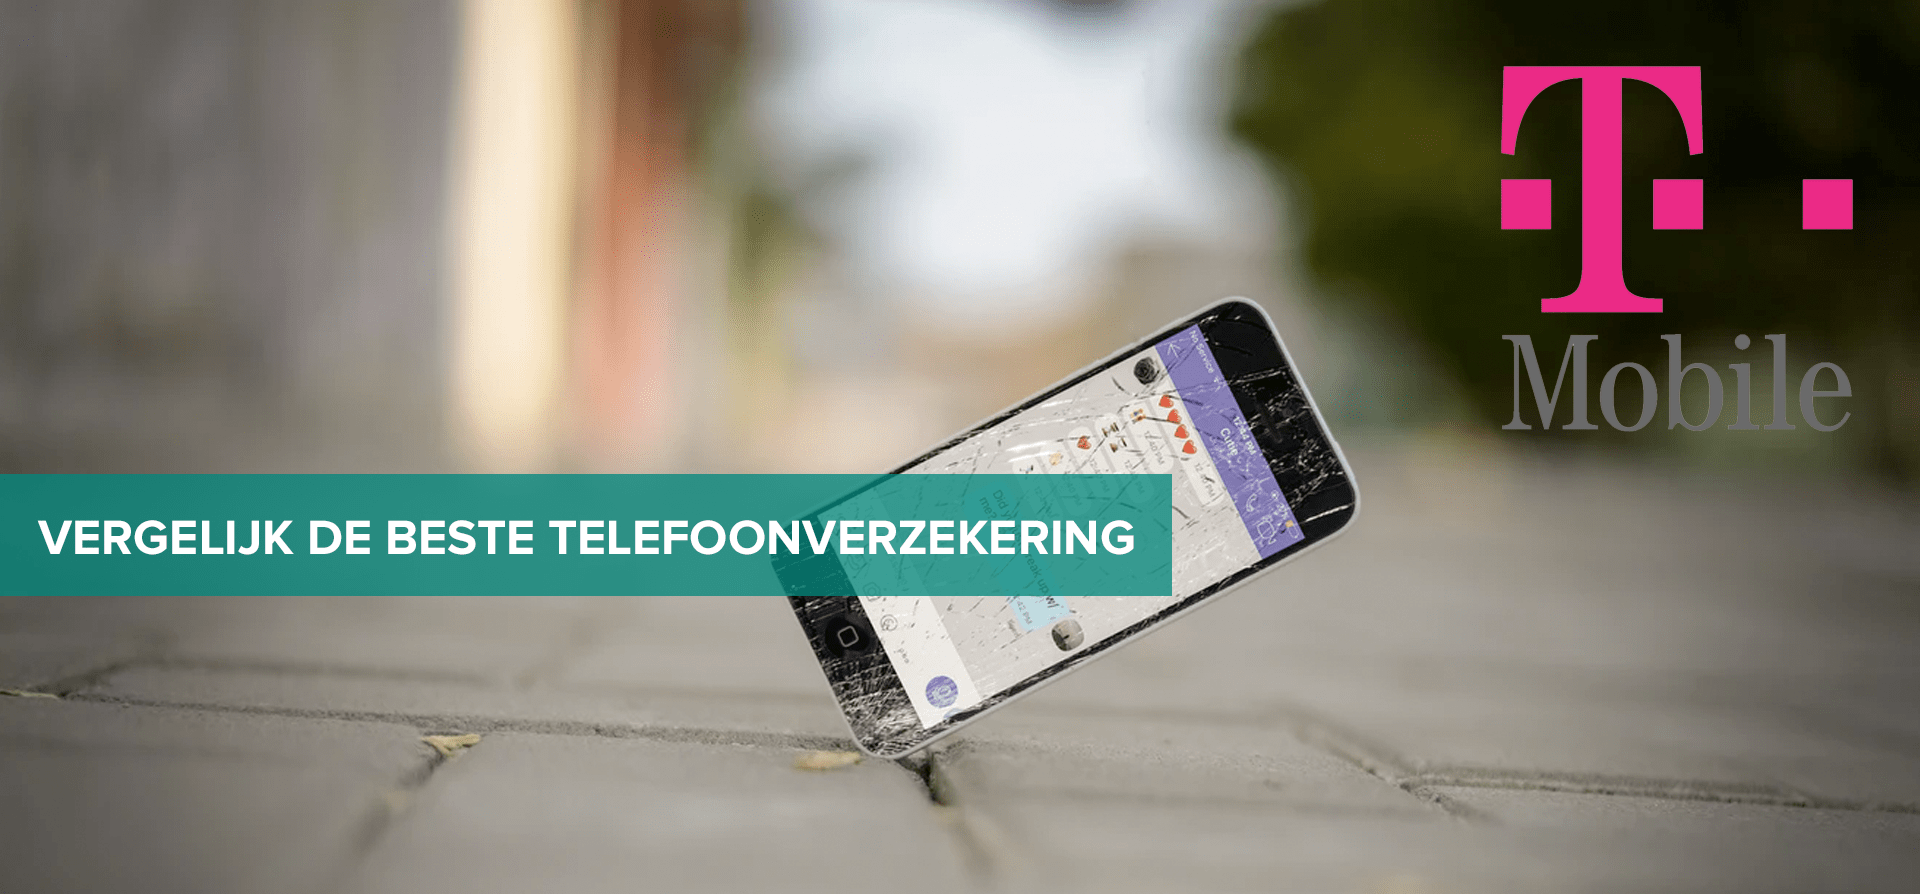 T-mobile telefoonverzekering